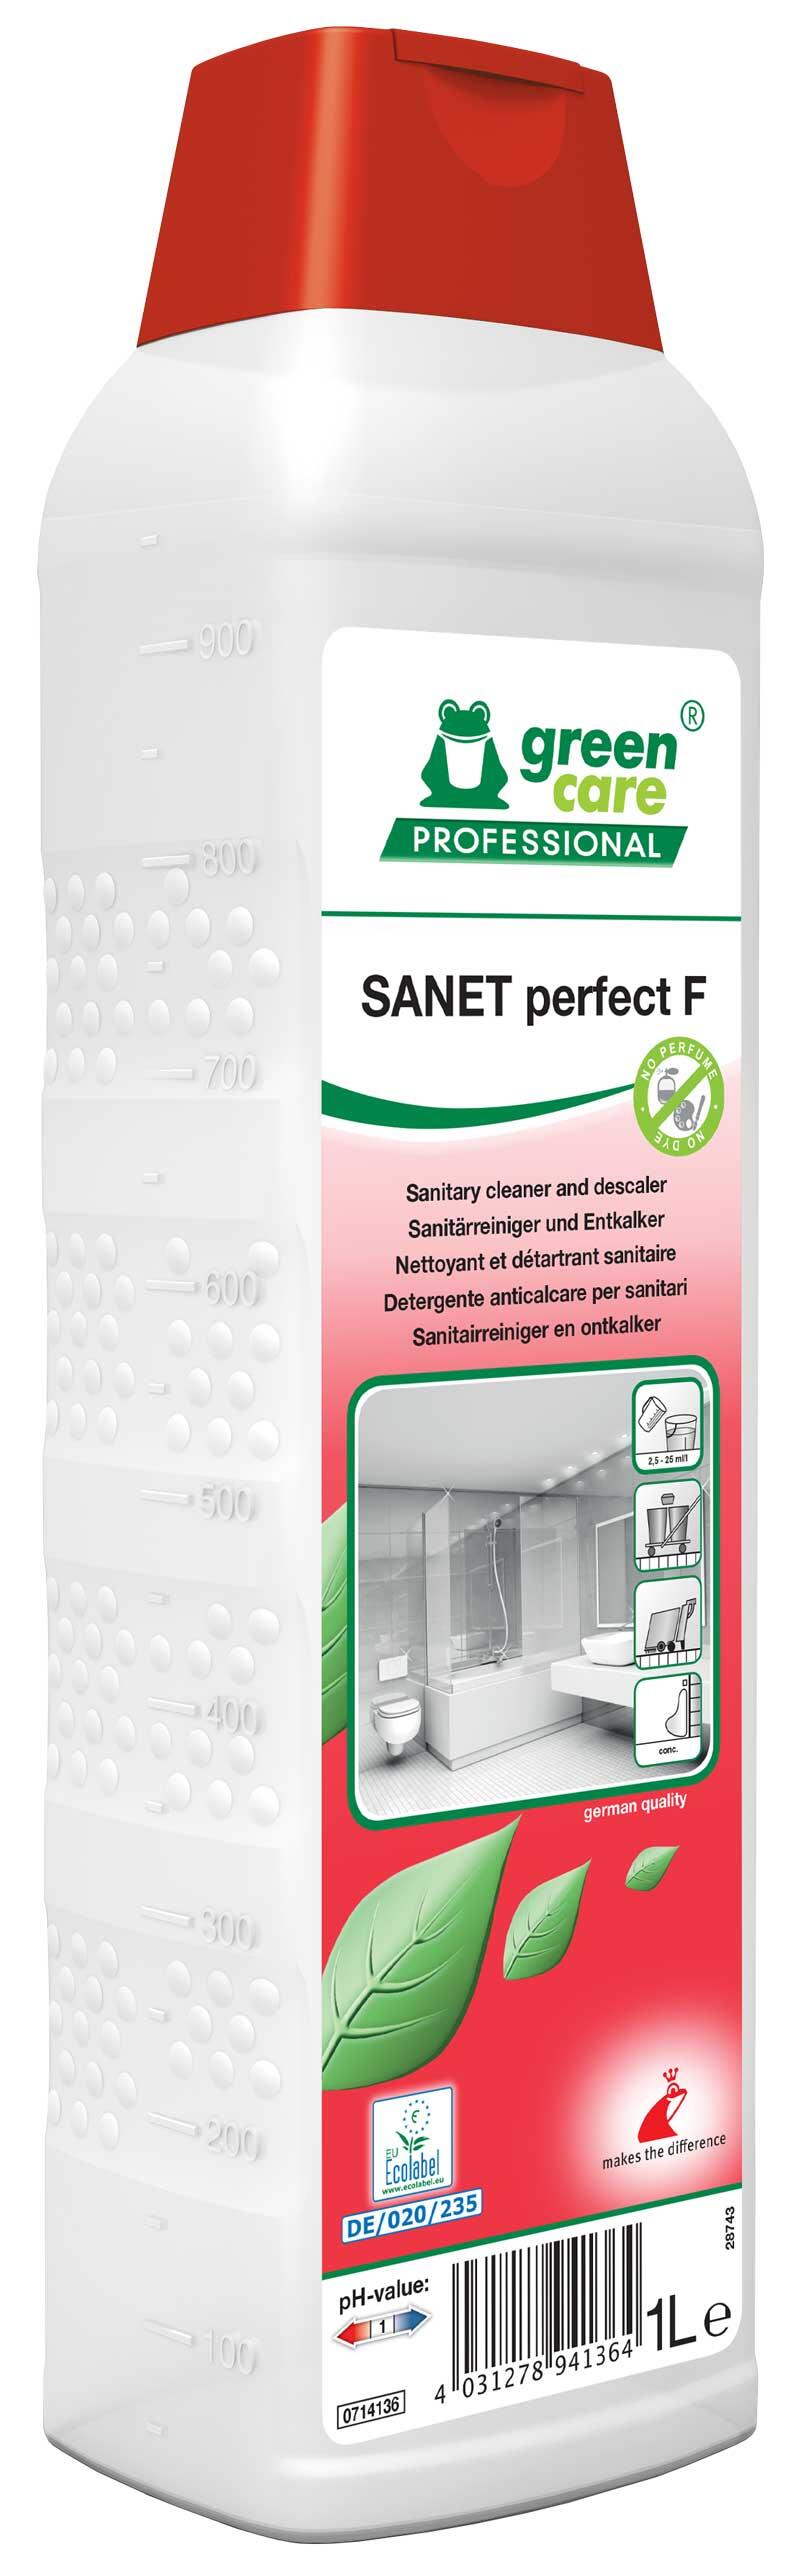 Sanitetsrent Green Care Sanet Perfect F 1L